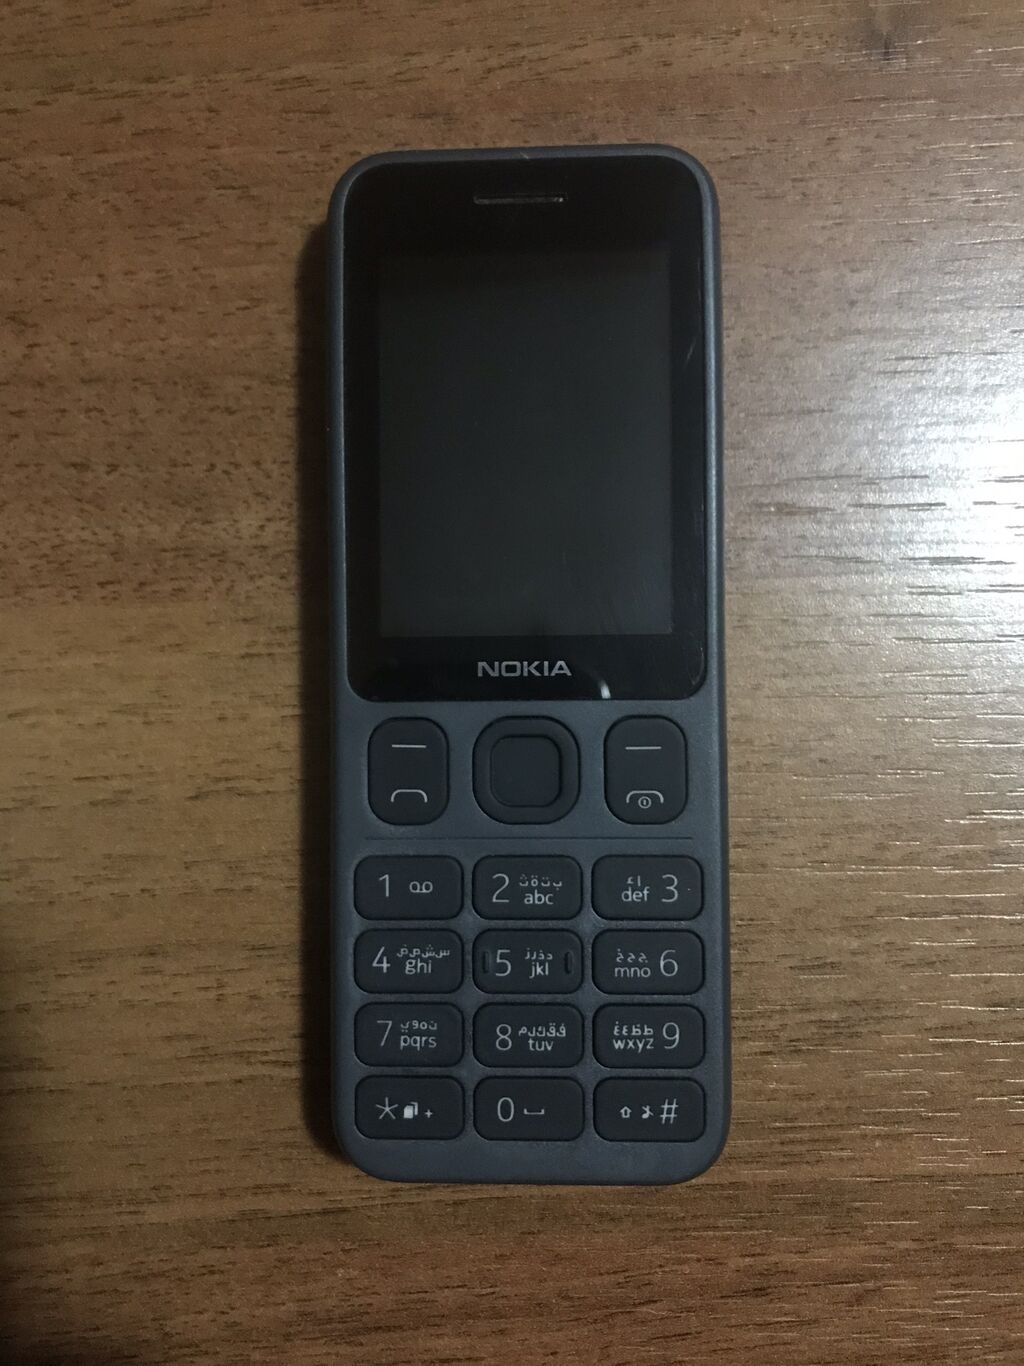 Nokia: Nokia 125 .Tezedeir. Son qiymetdi
Bakcell nömre ile işleyir — 1